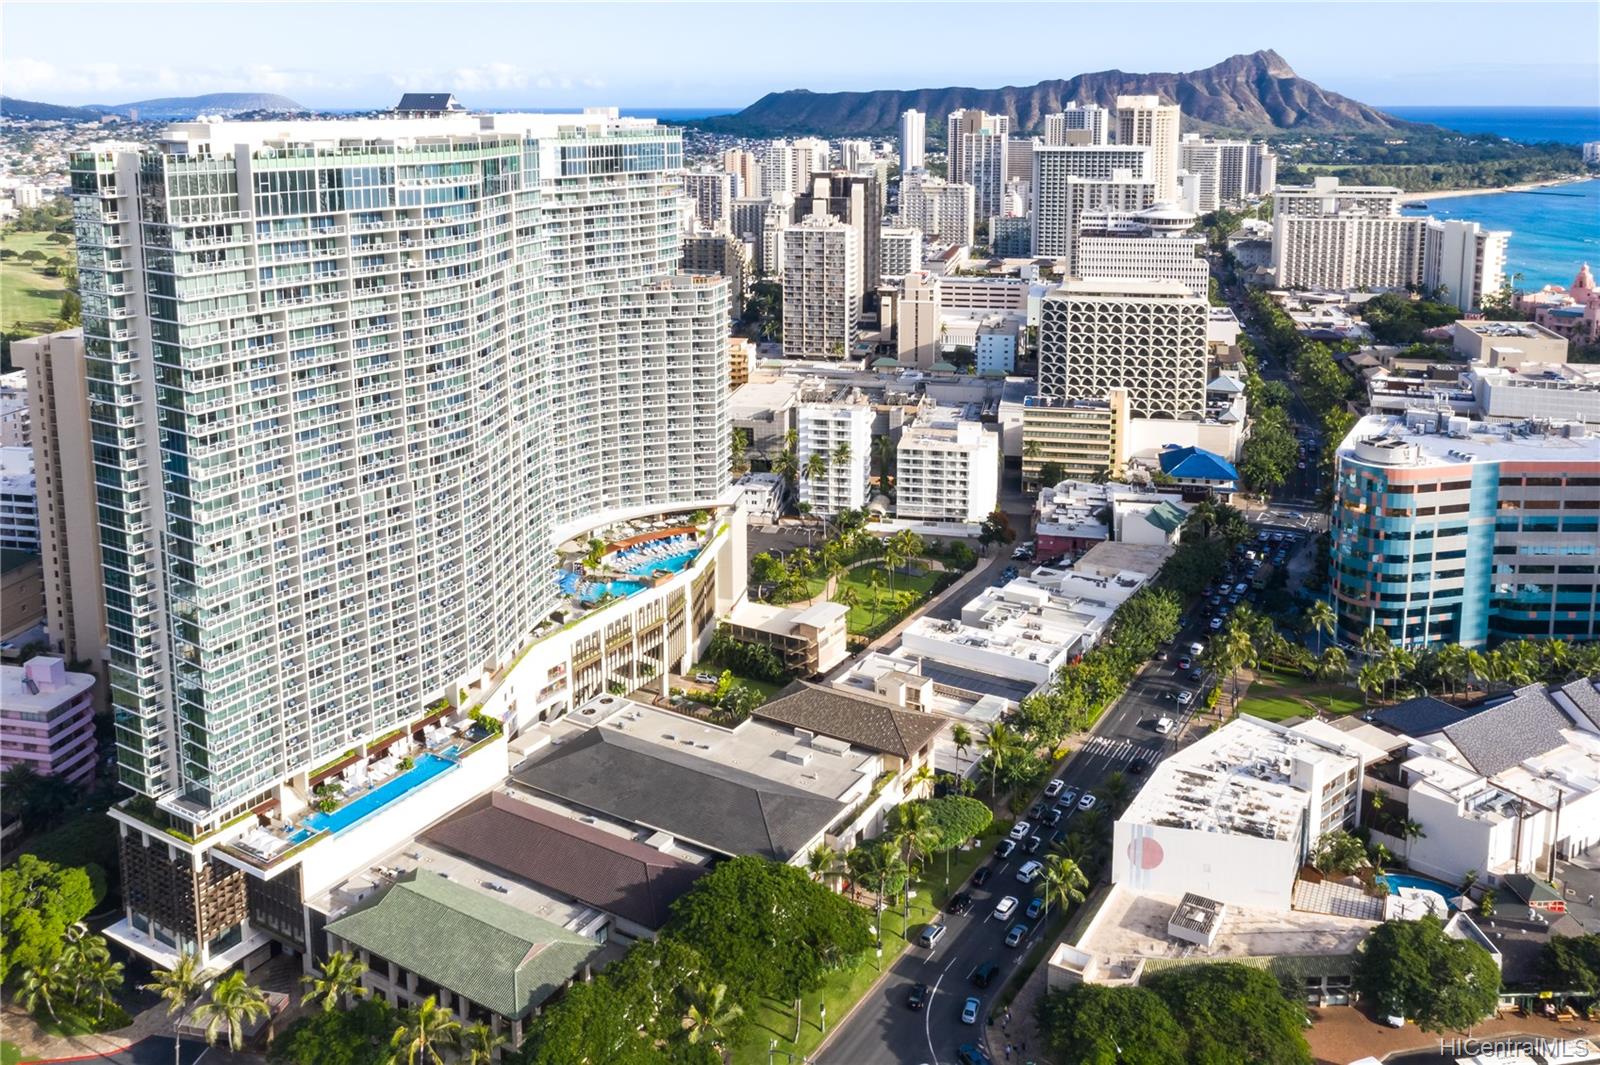 The Ritz-Carlton Residences Twr 2 - 383 Kalaimoku 2139 Kuhio Avenue #PH-C, Honolulu, HI 96815